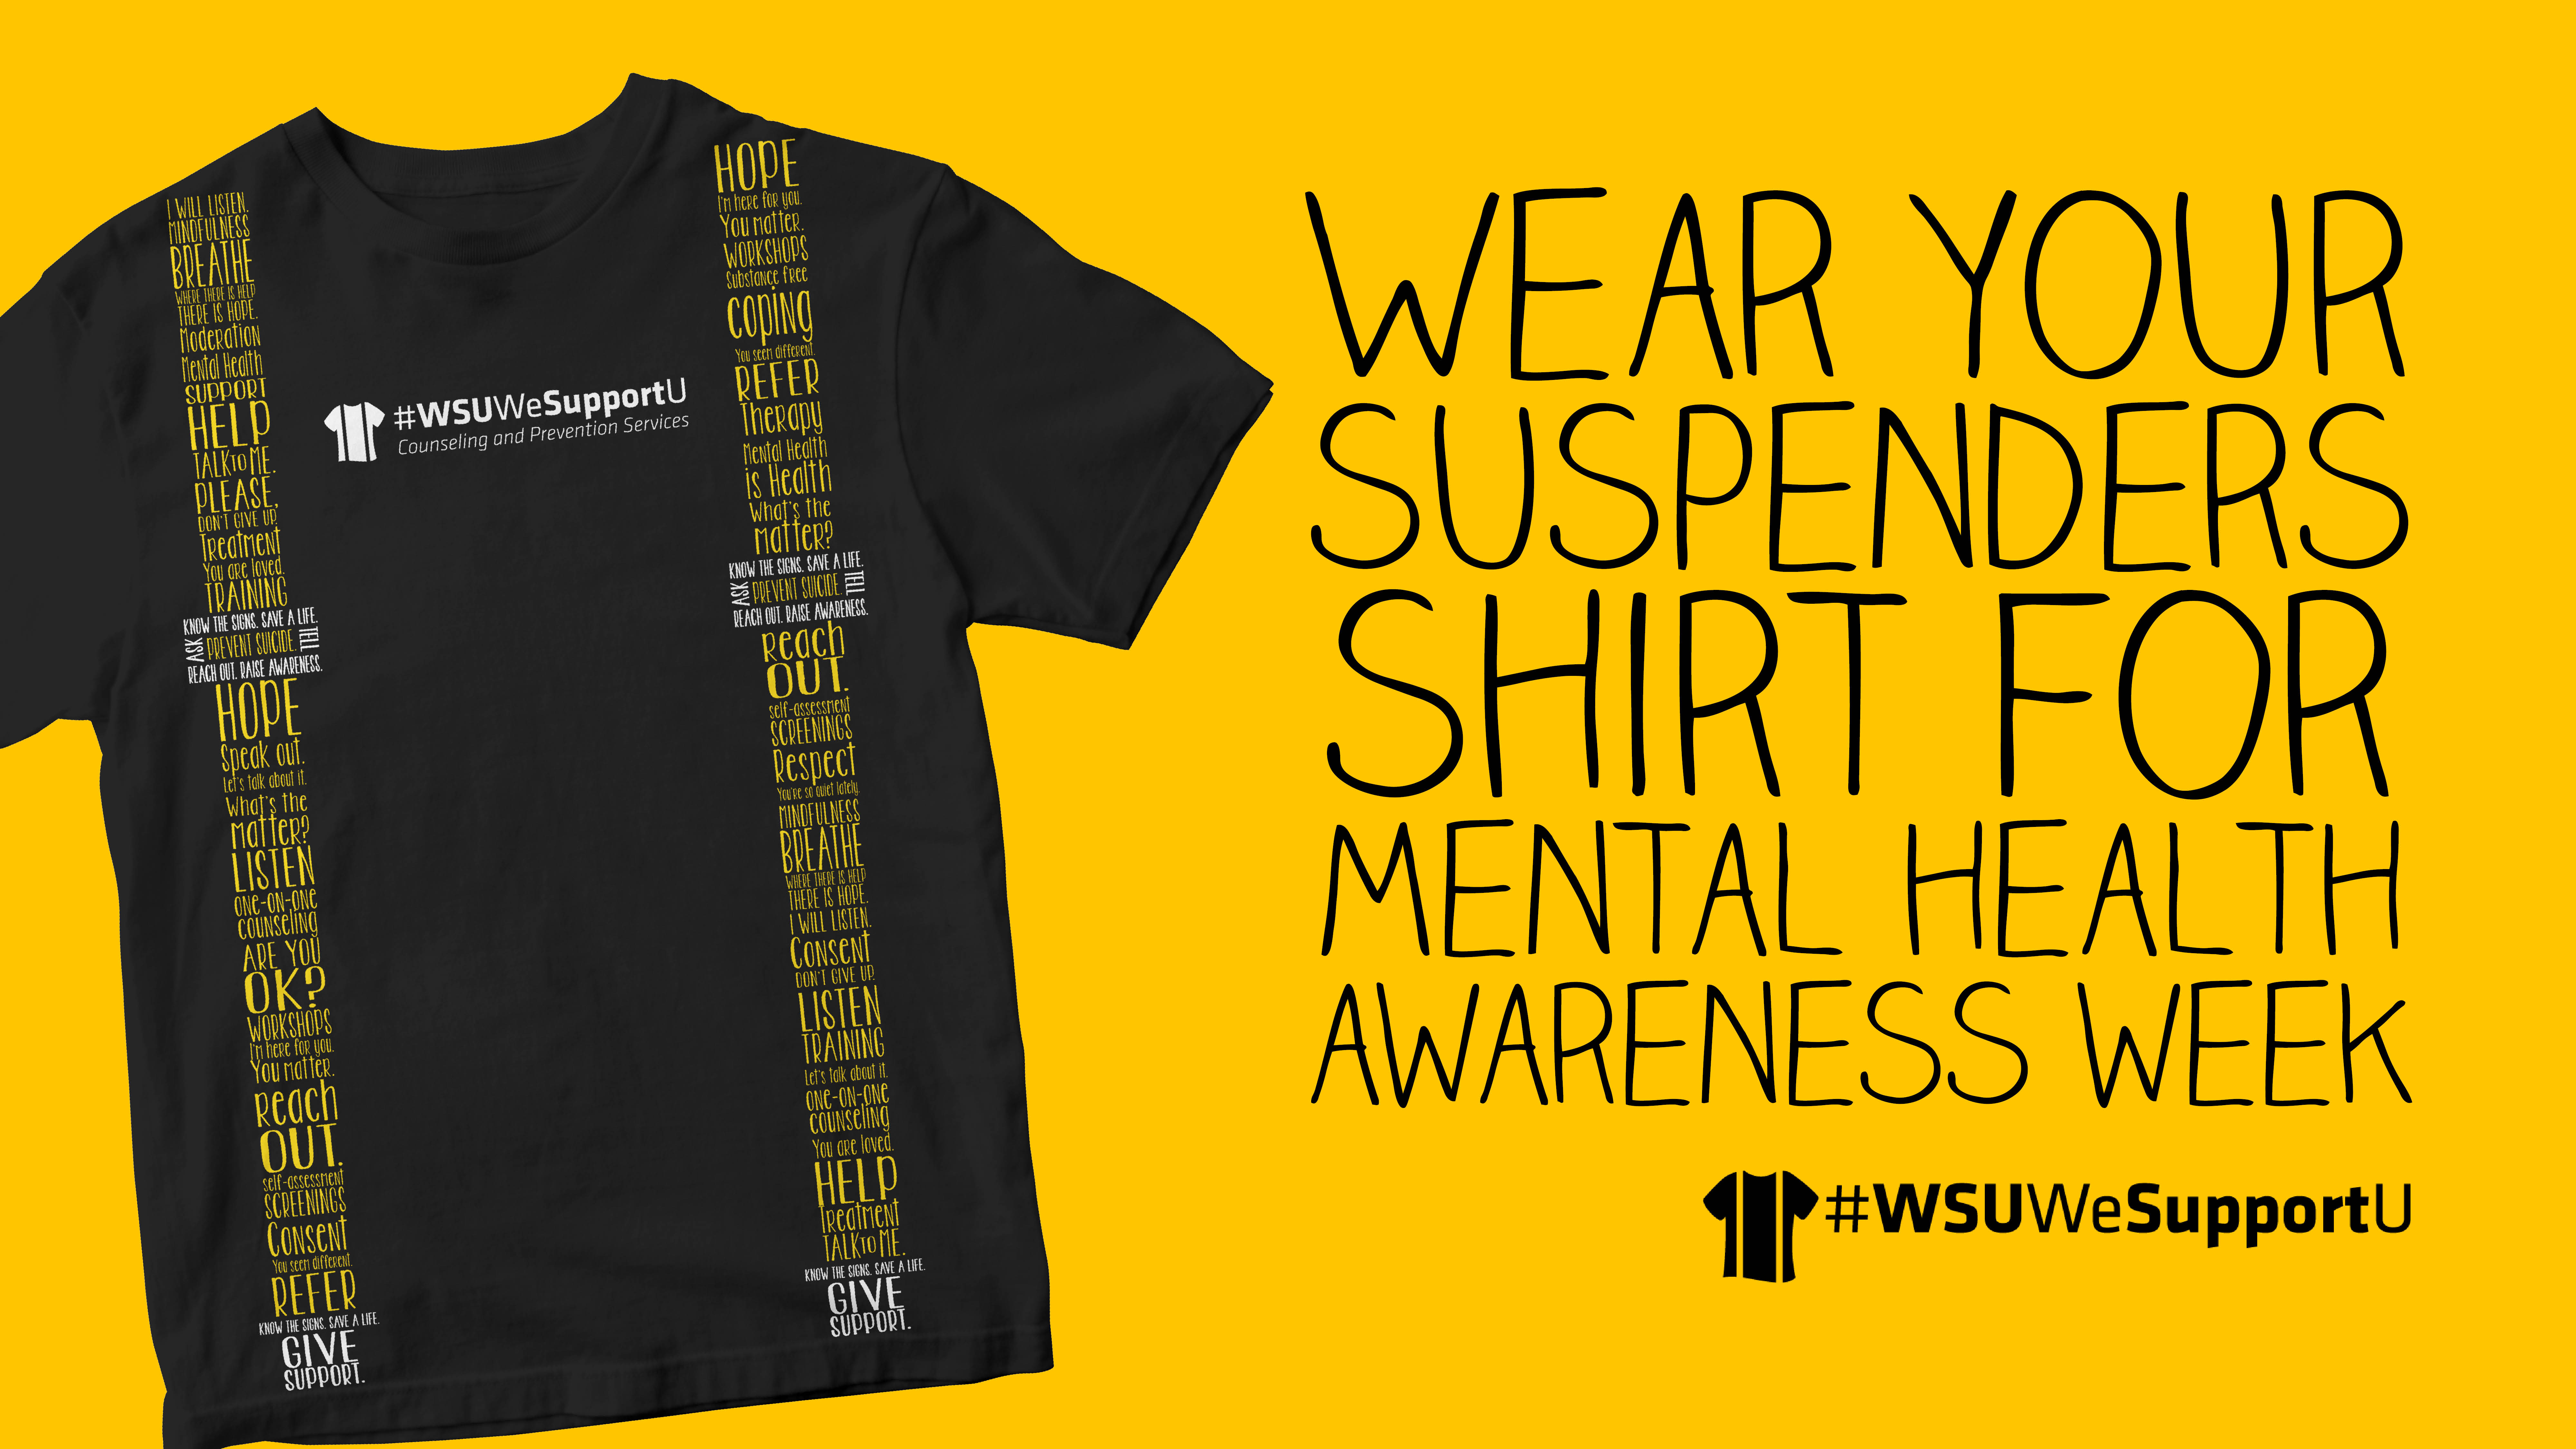 Wear your suspenders shirt for mental health awareness week